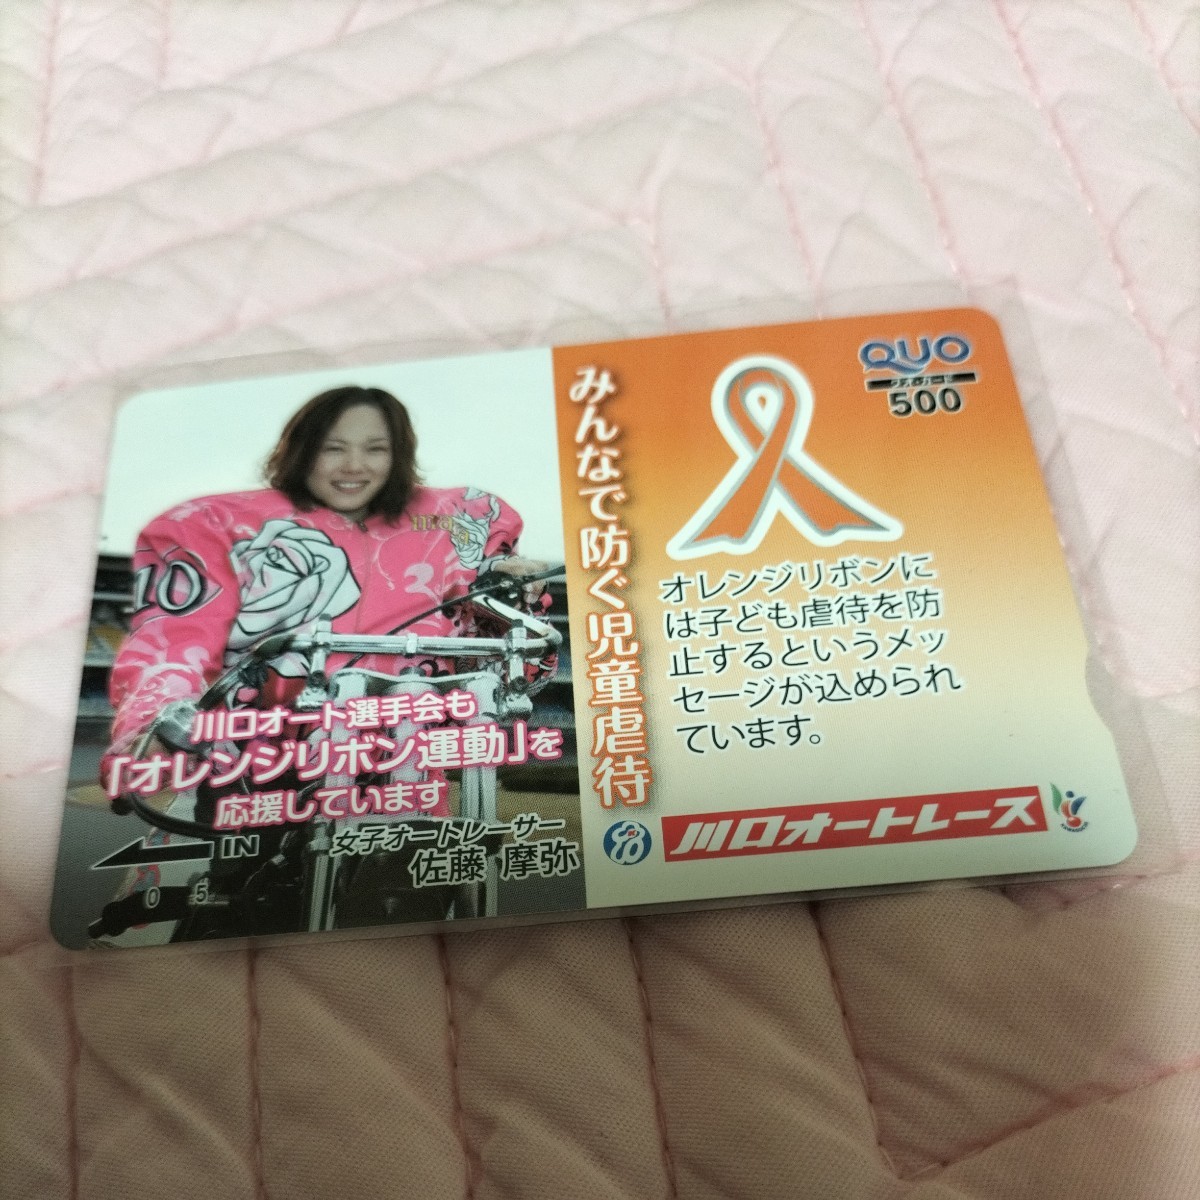 Кавагучи -гоночный гонщик женский гонщик Maya Sato Kuo Card